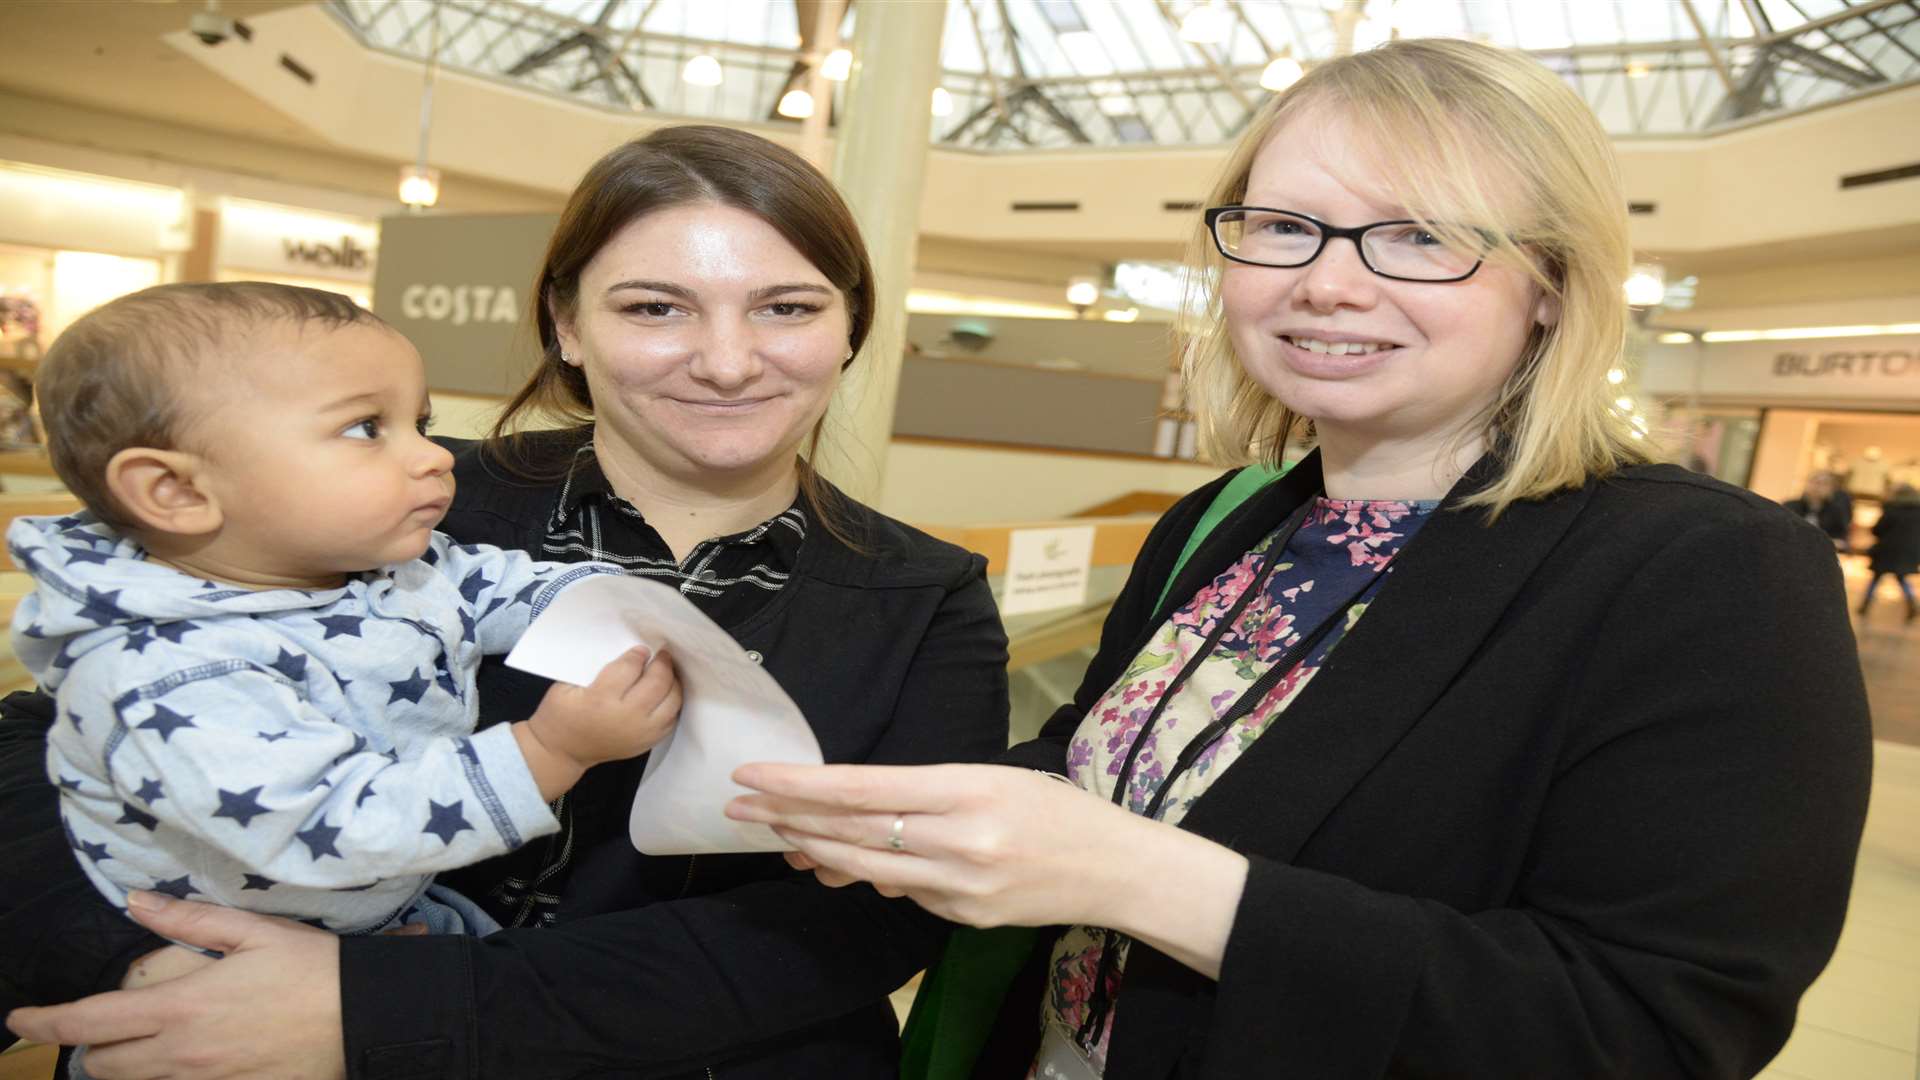 Roman, 8 months, and mum Kelly Matthews talk with Hempstead Valley's marketing manager Su Button